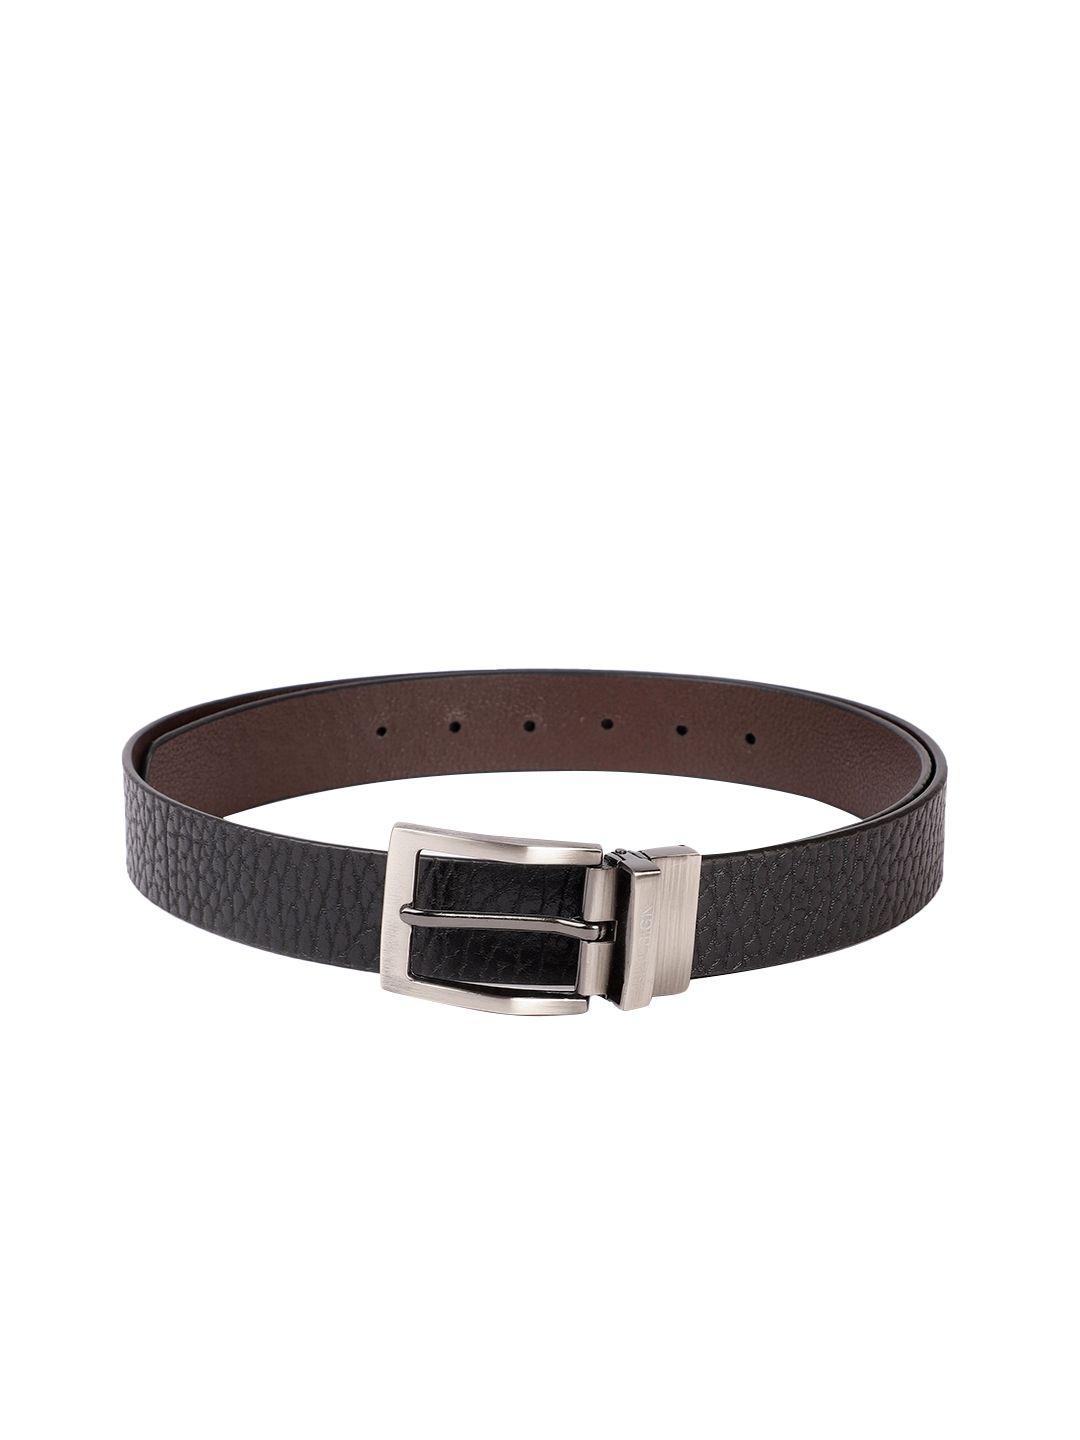 hidesign men black & brown textured reversible leather belt